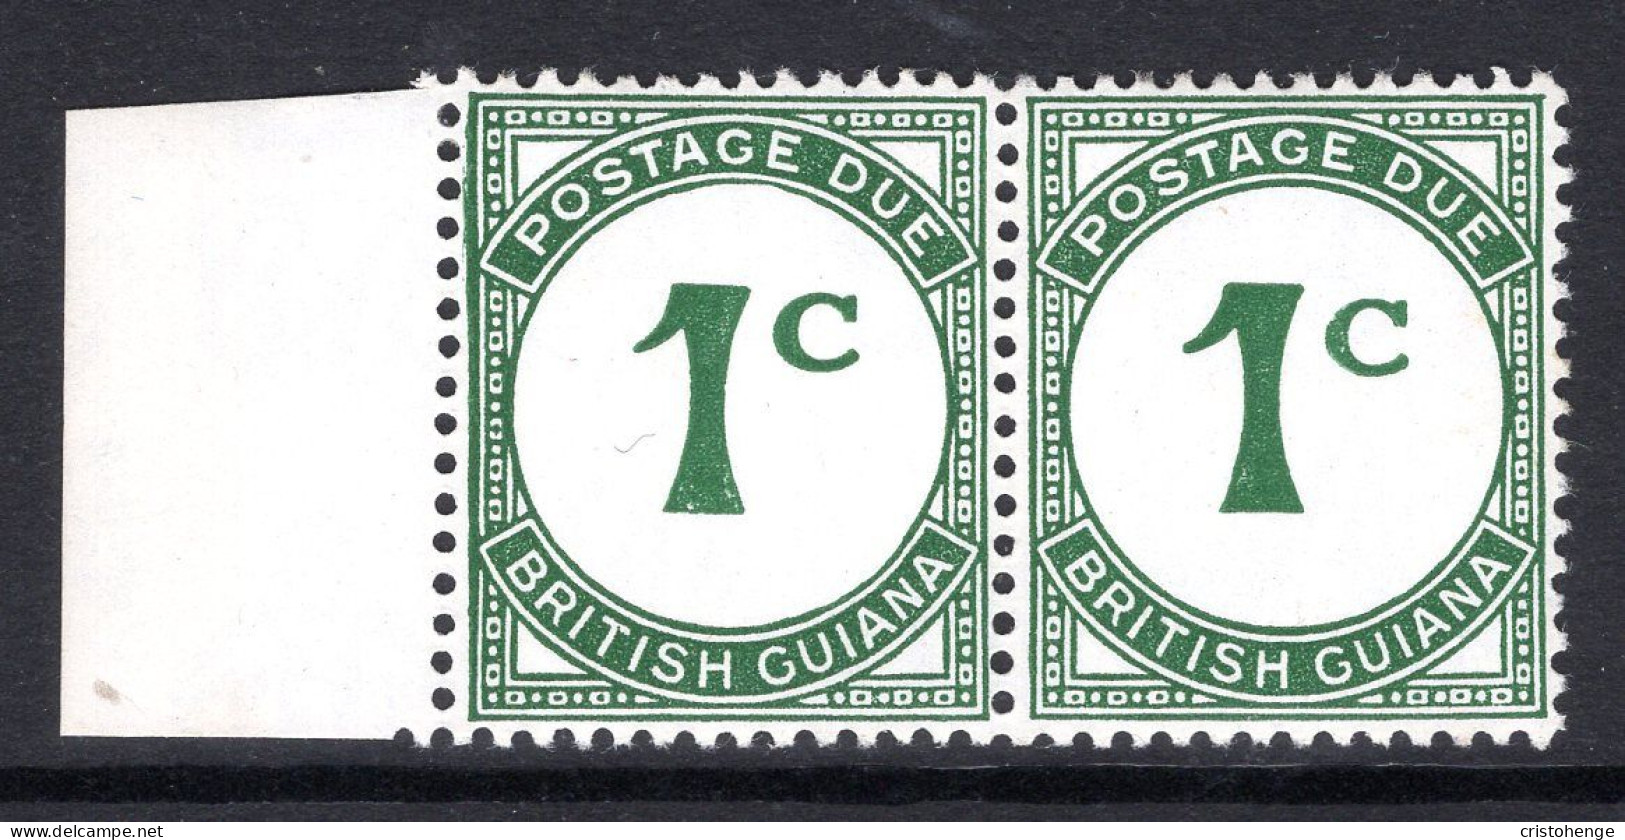 British Guiana 1952 Postage Due - Chalk-surfaced Paper - 1c Green Pair HM (SG D1a) - British Guiana (...-1966)